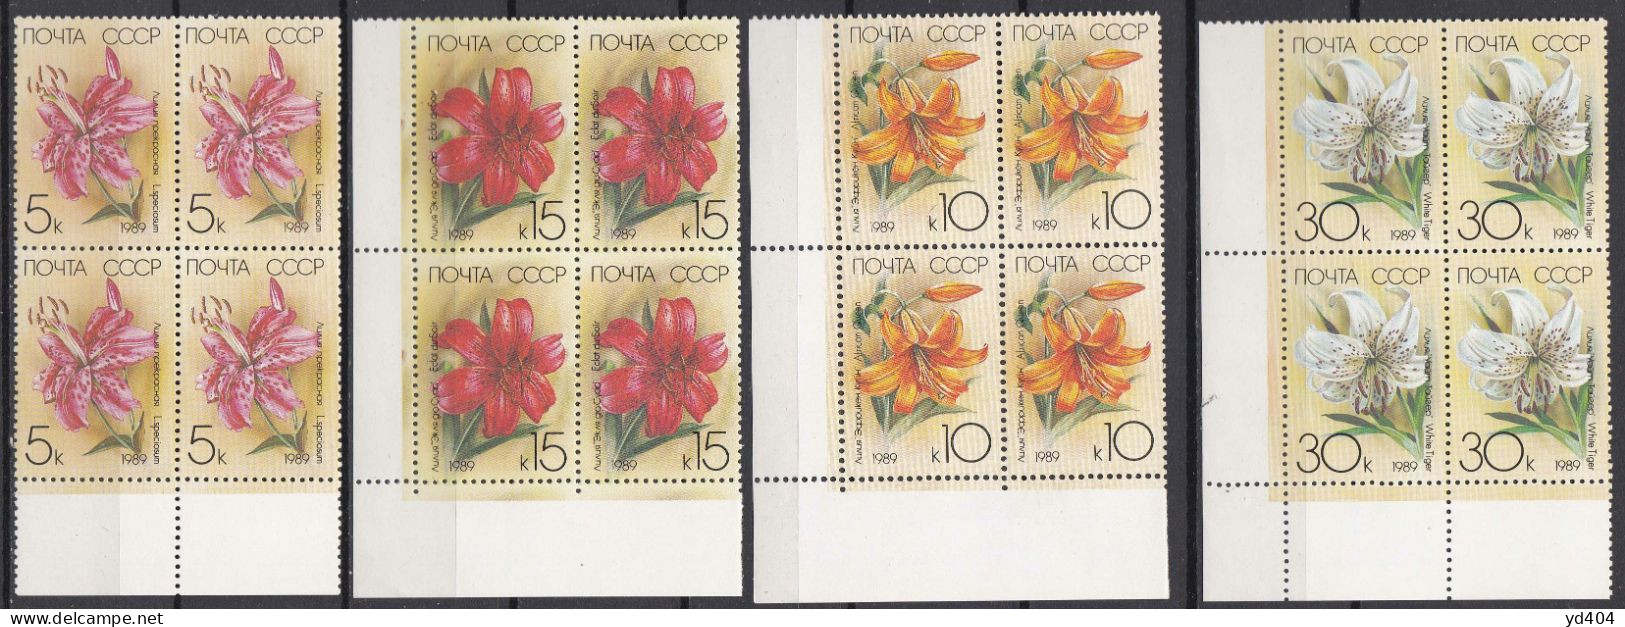 RU146– URSS - USSR – 1989 – FLOWERS / LILIES – SG # 5558/62 MNH 11 € - Unused Stamps